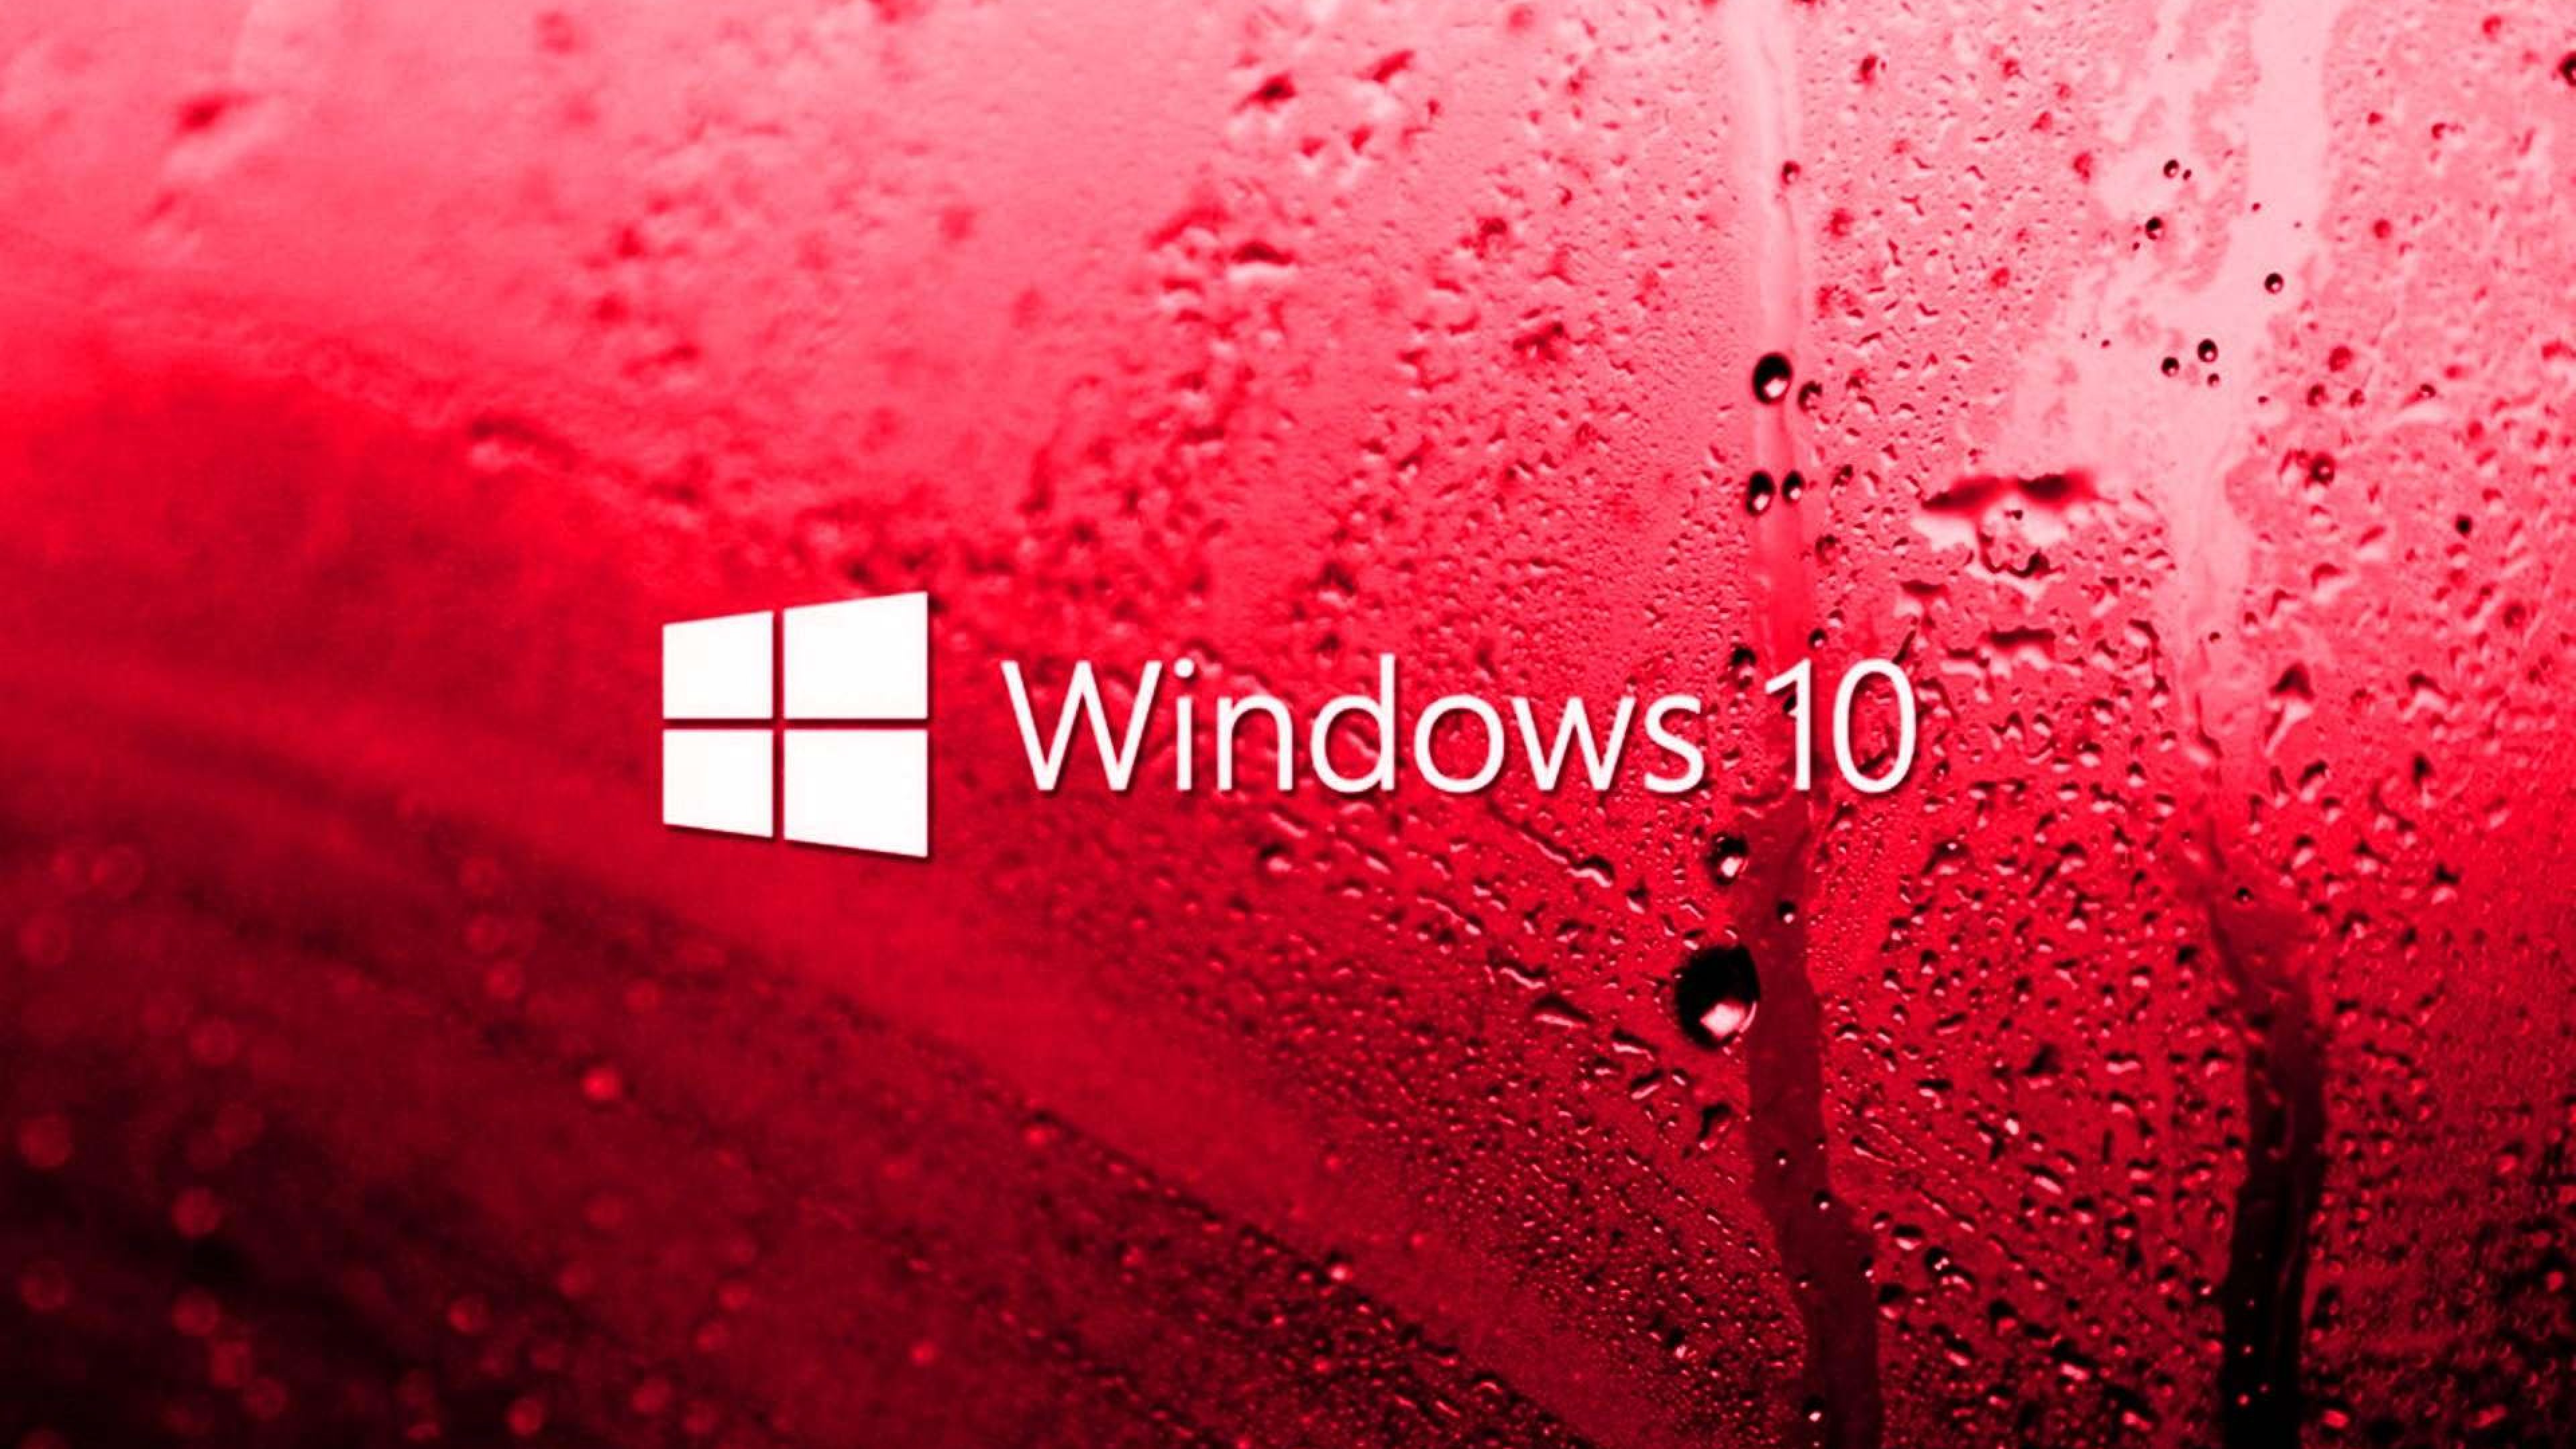 Windows 10 4k Wallpaper Download - 3840x2160 Wallpaper ...